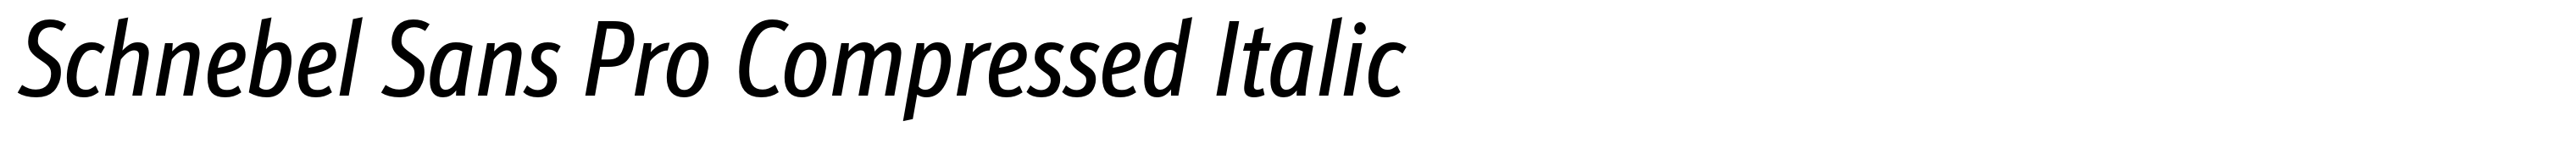 Schnebel Sans Pro Compressed Italic